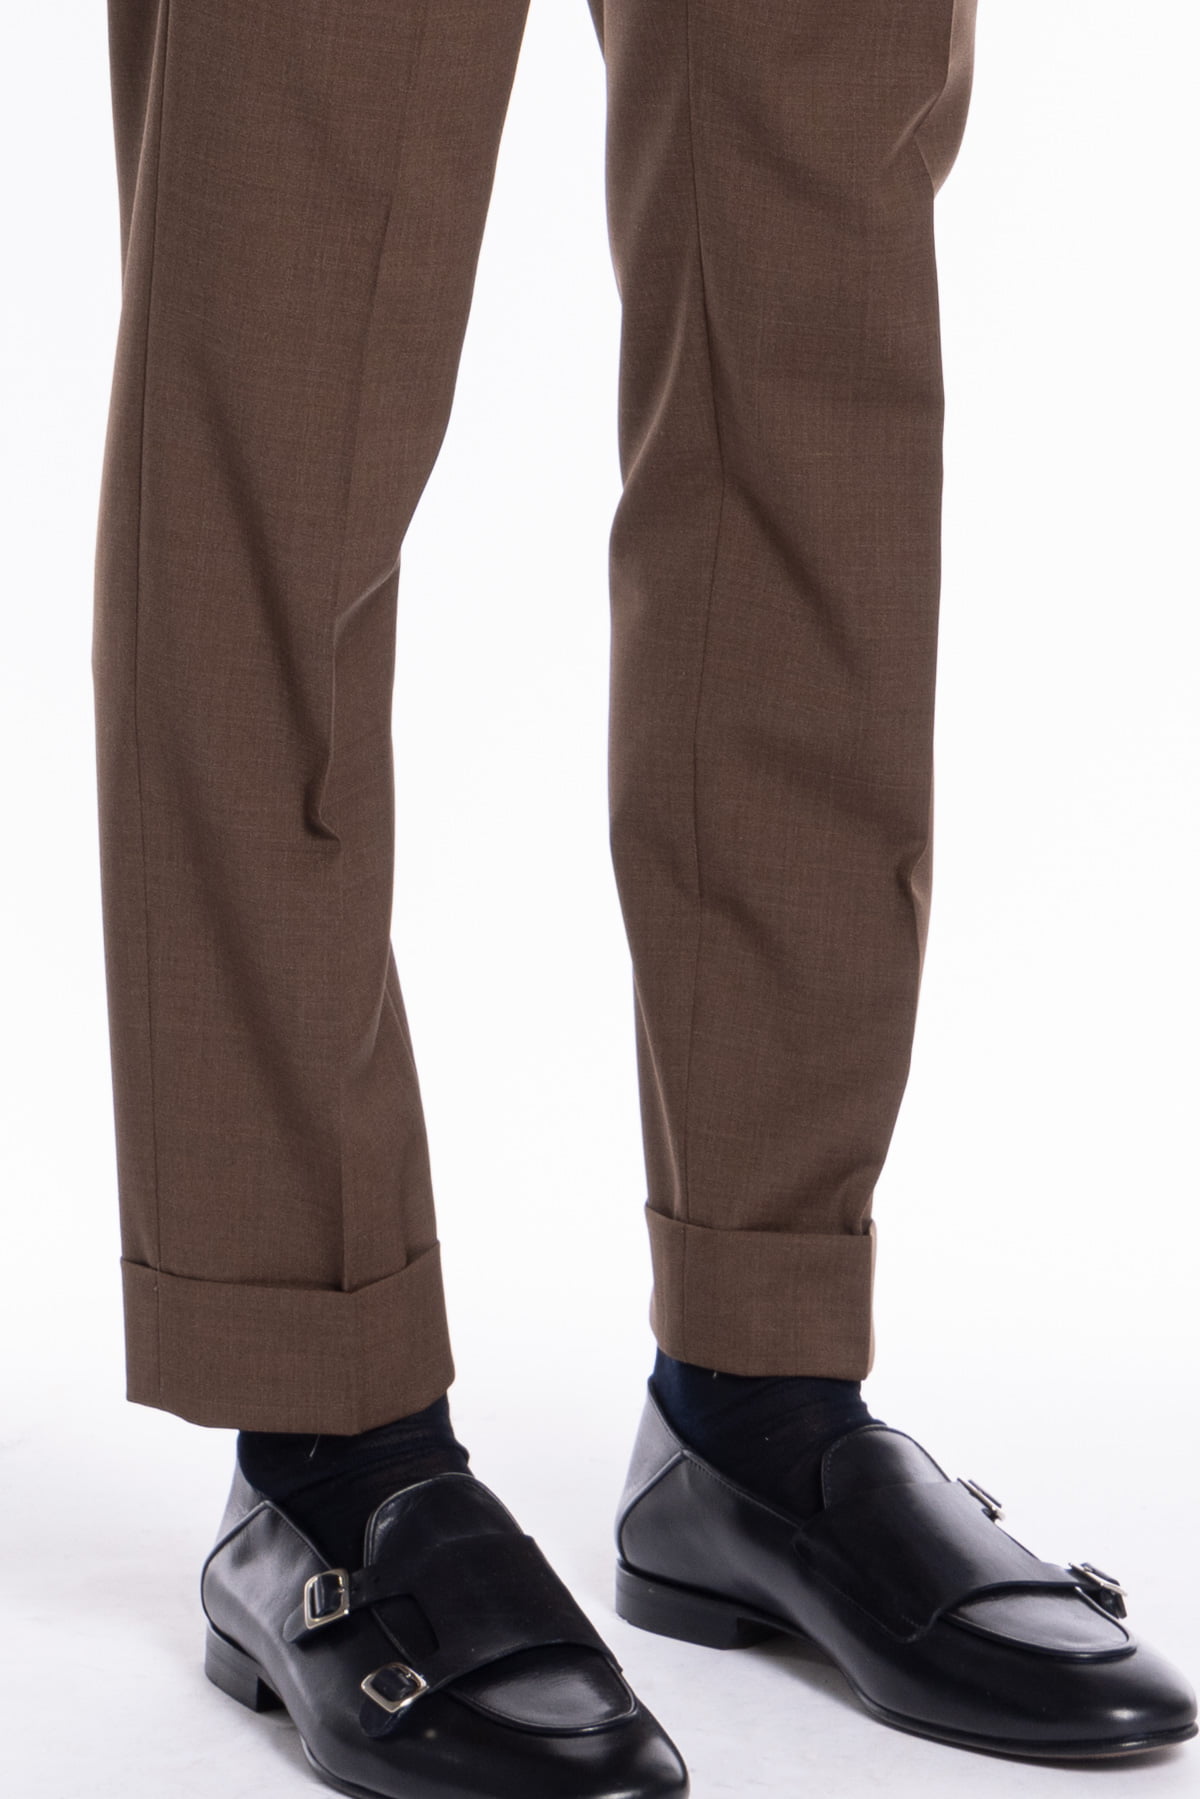 Pantalone uomo Marrone in fresco lana mista chiusura prolungata doppia pinces